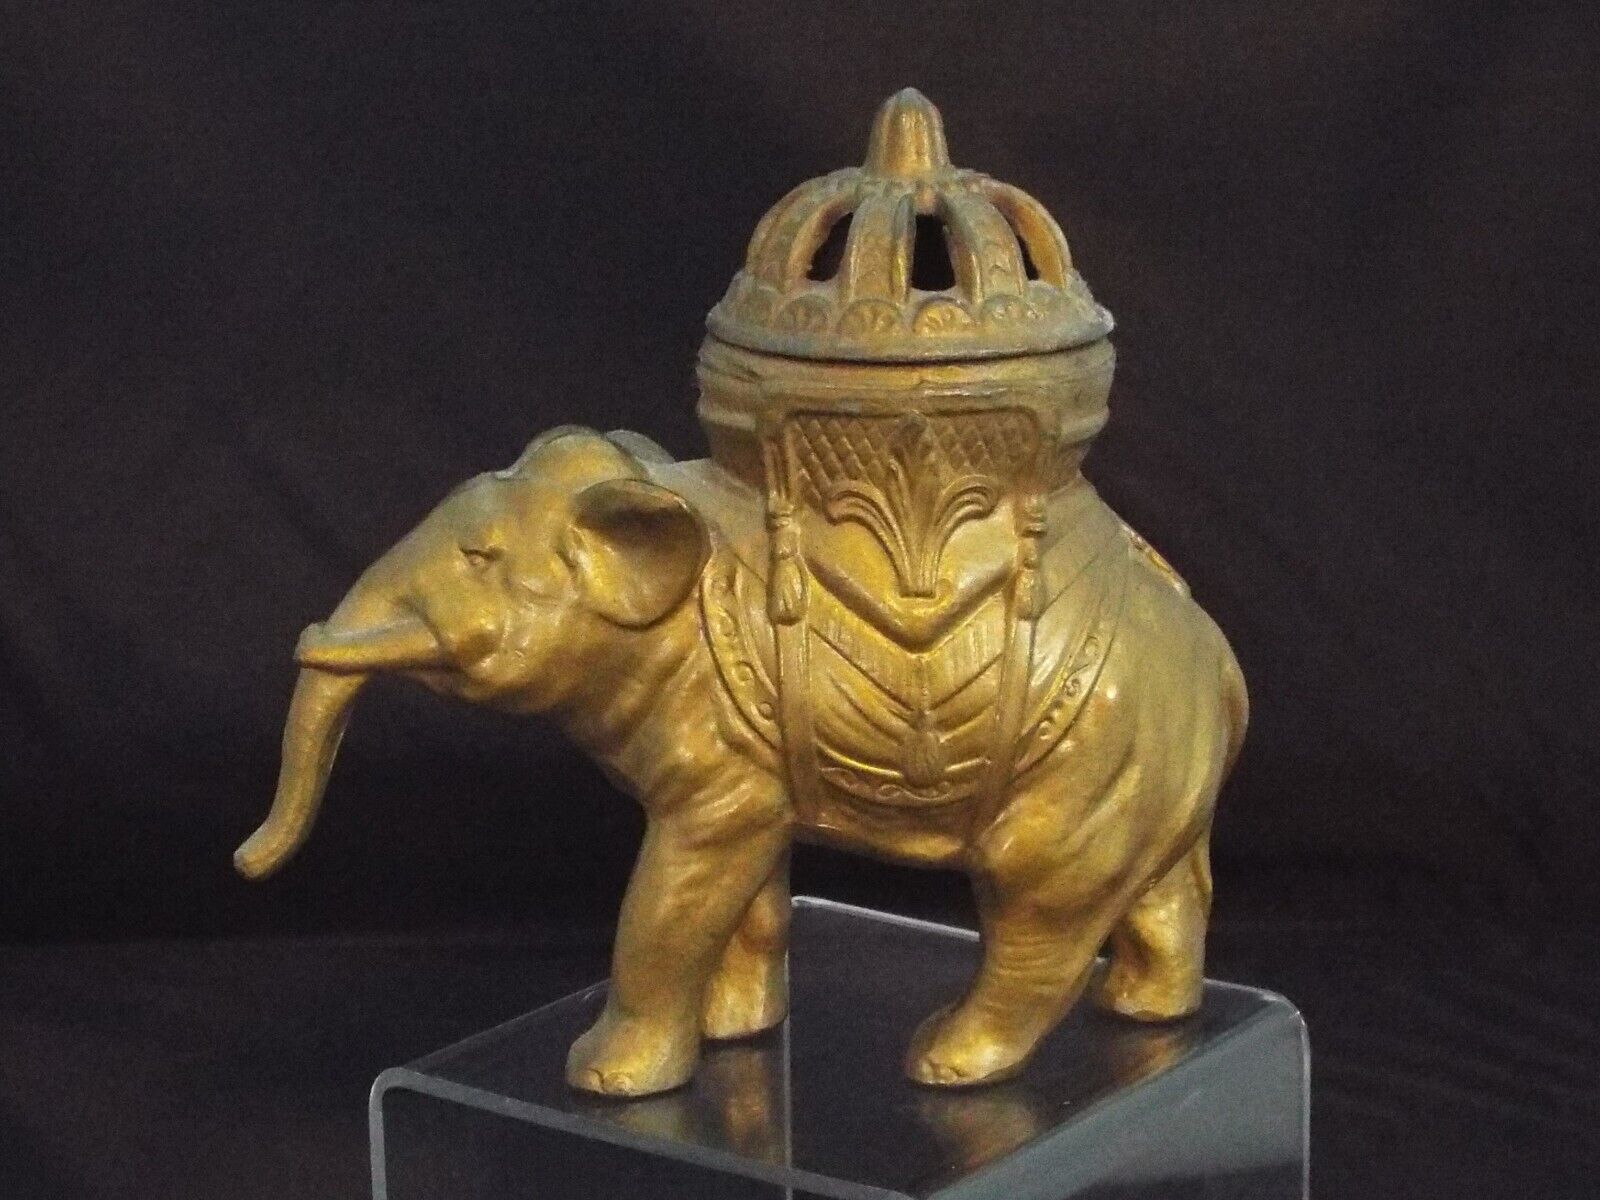 Antique VANTINES Elephant Incense Burner Beautiful Gold Paint Intact - 0248